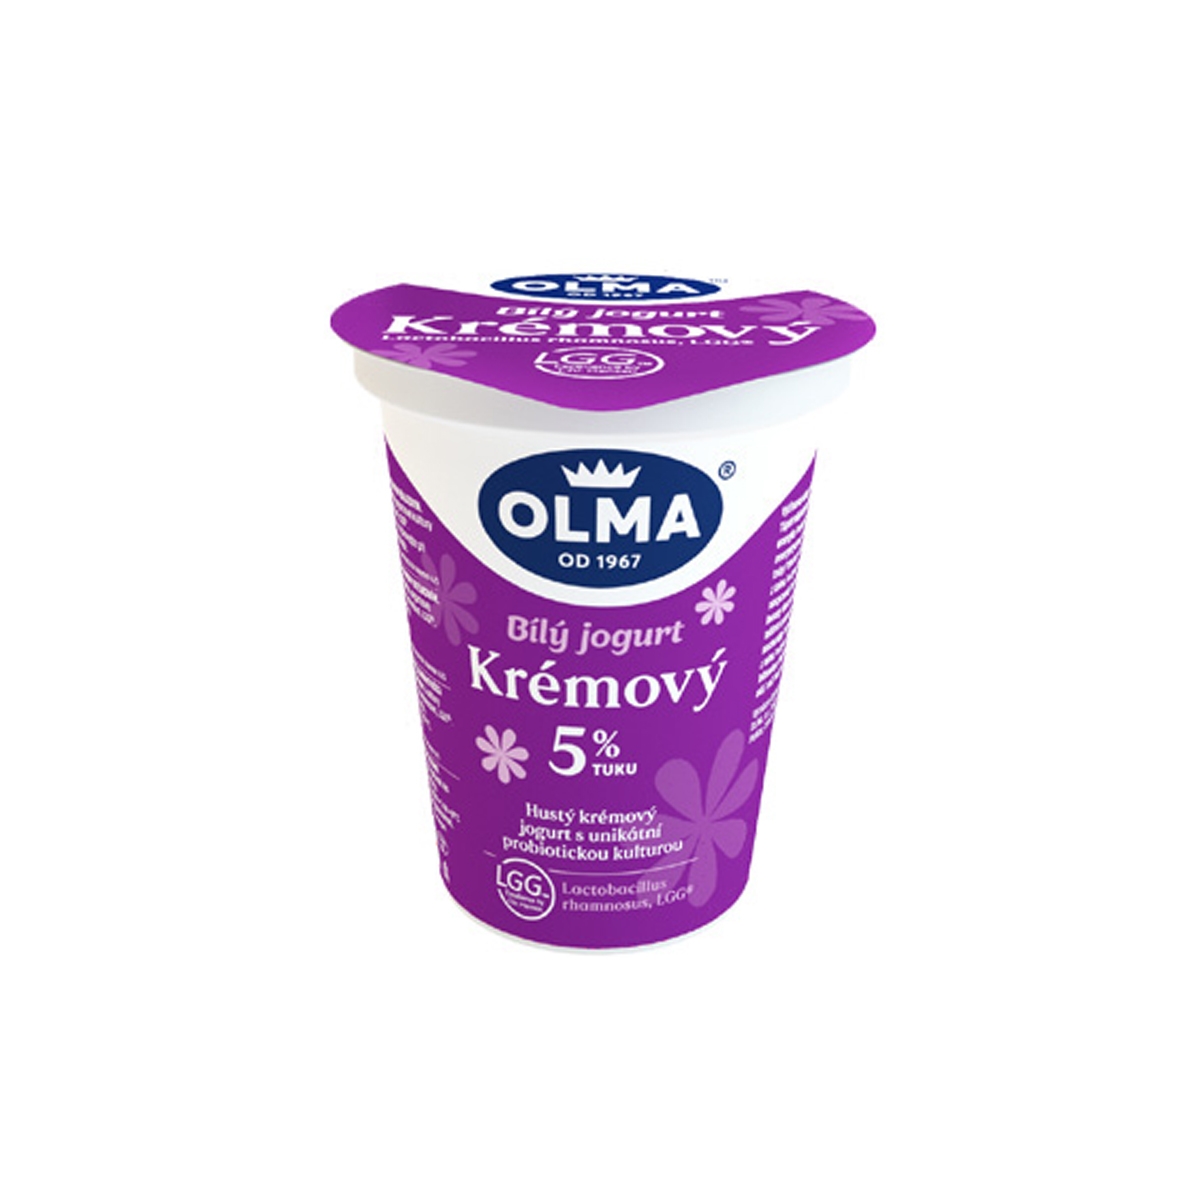 Krémový jogurt bílý 5% 400 g